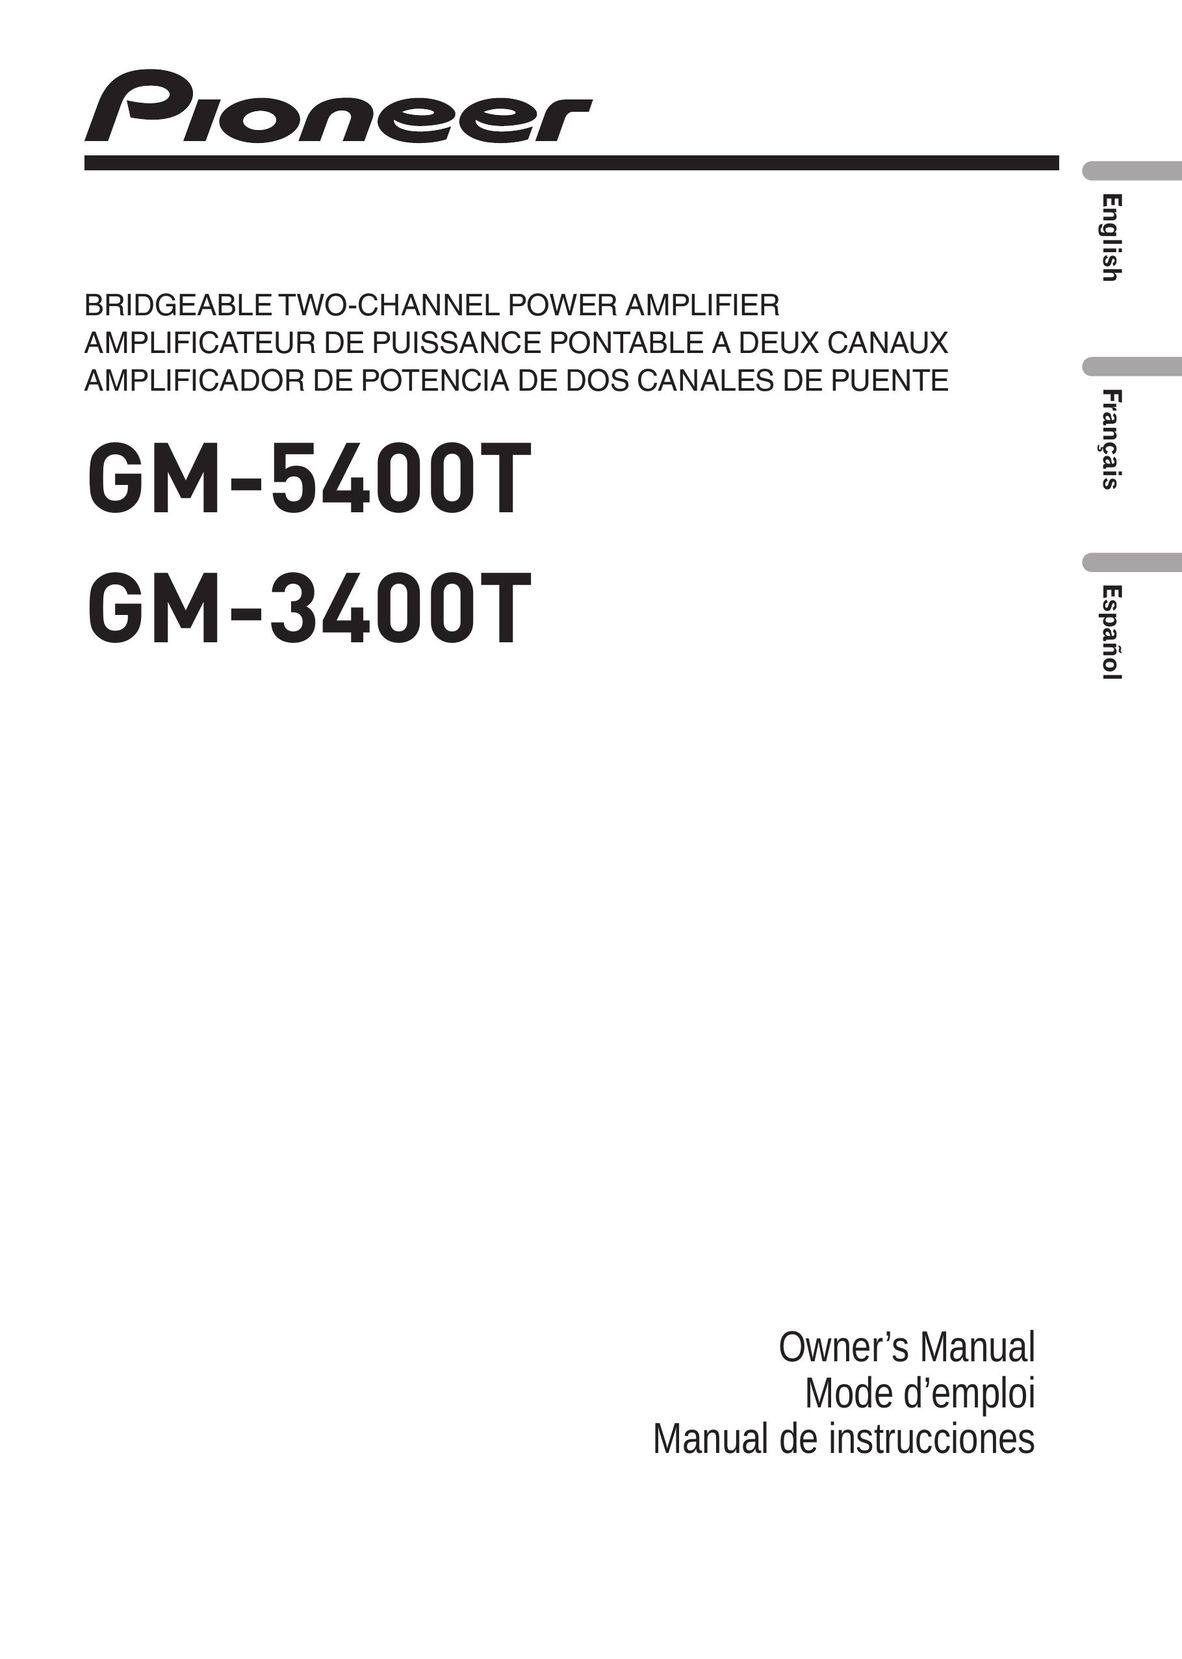 Pioneer GM-5400T Stereo Amplifier User Manual